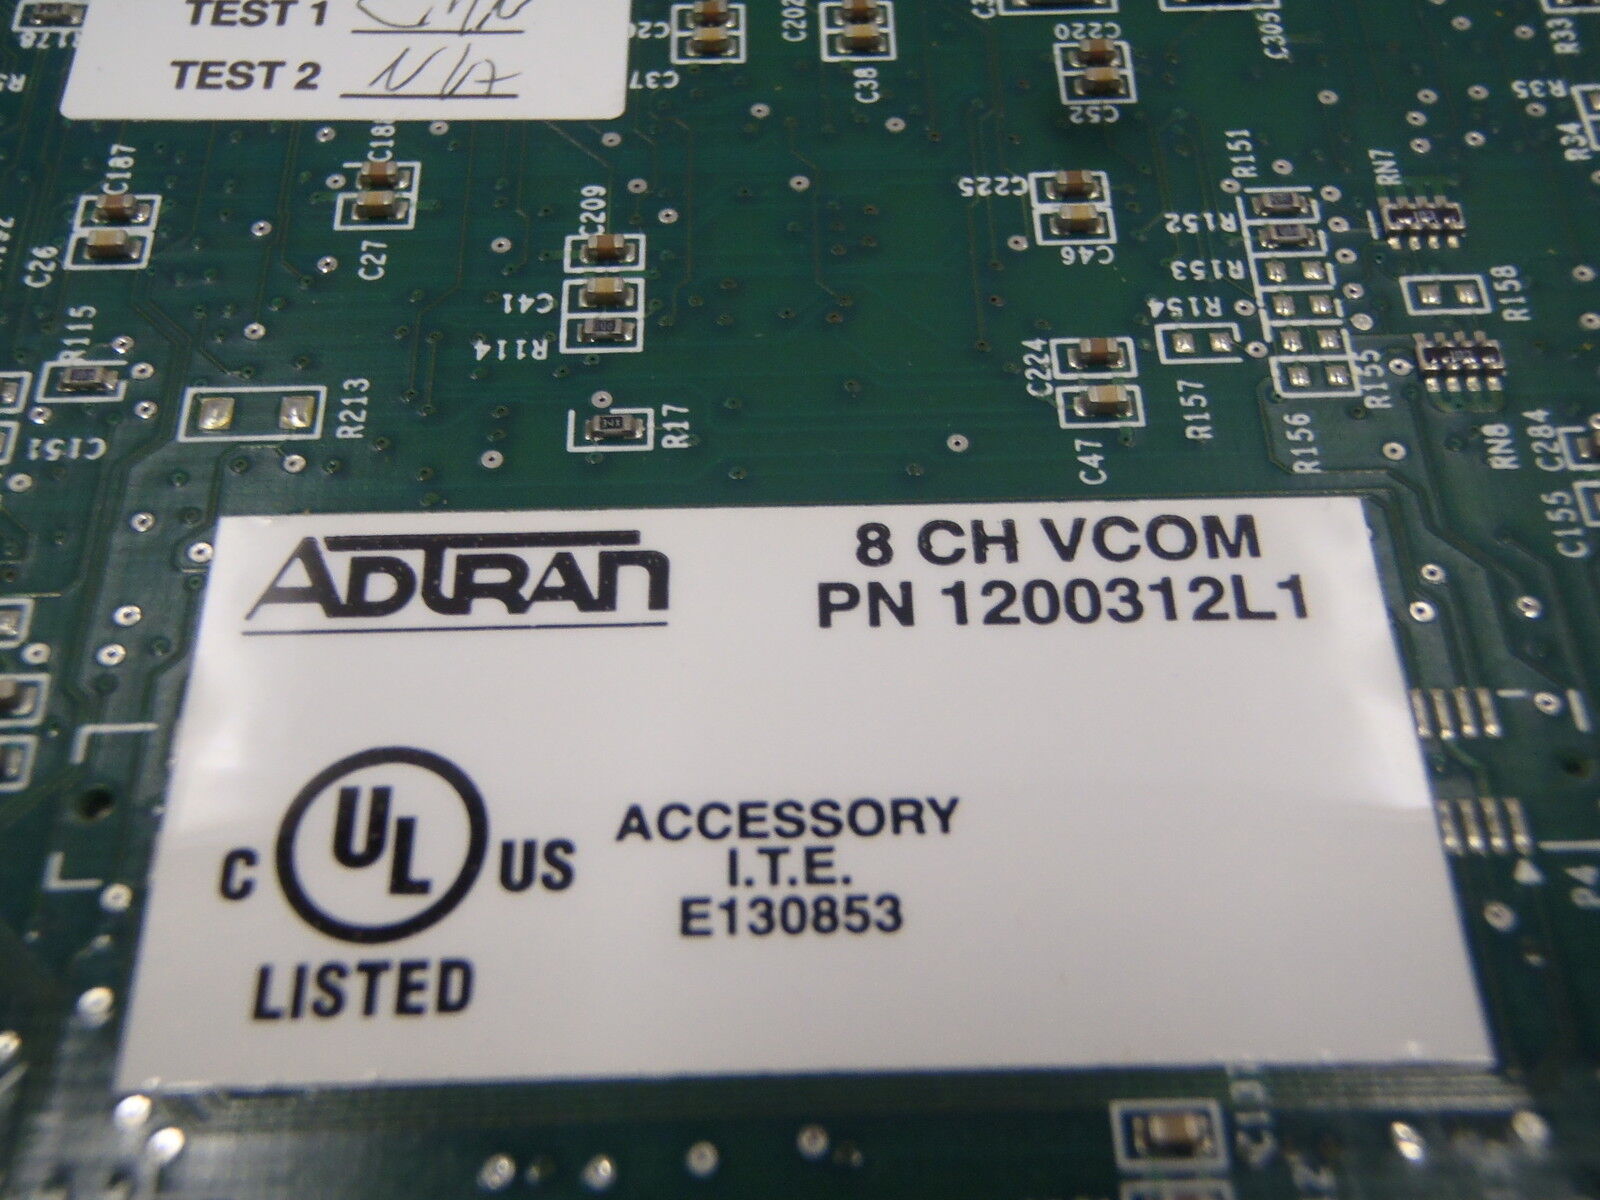 Adtran Atlas 550 1200312L1 VCOM Voice Compression Module